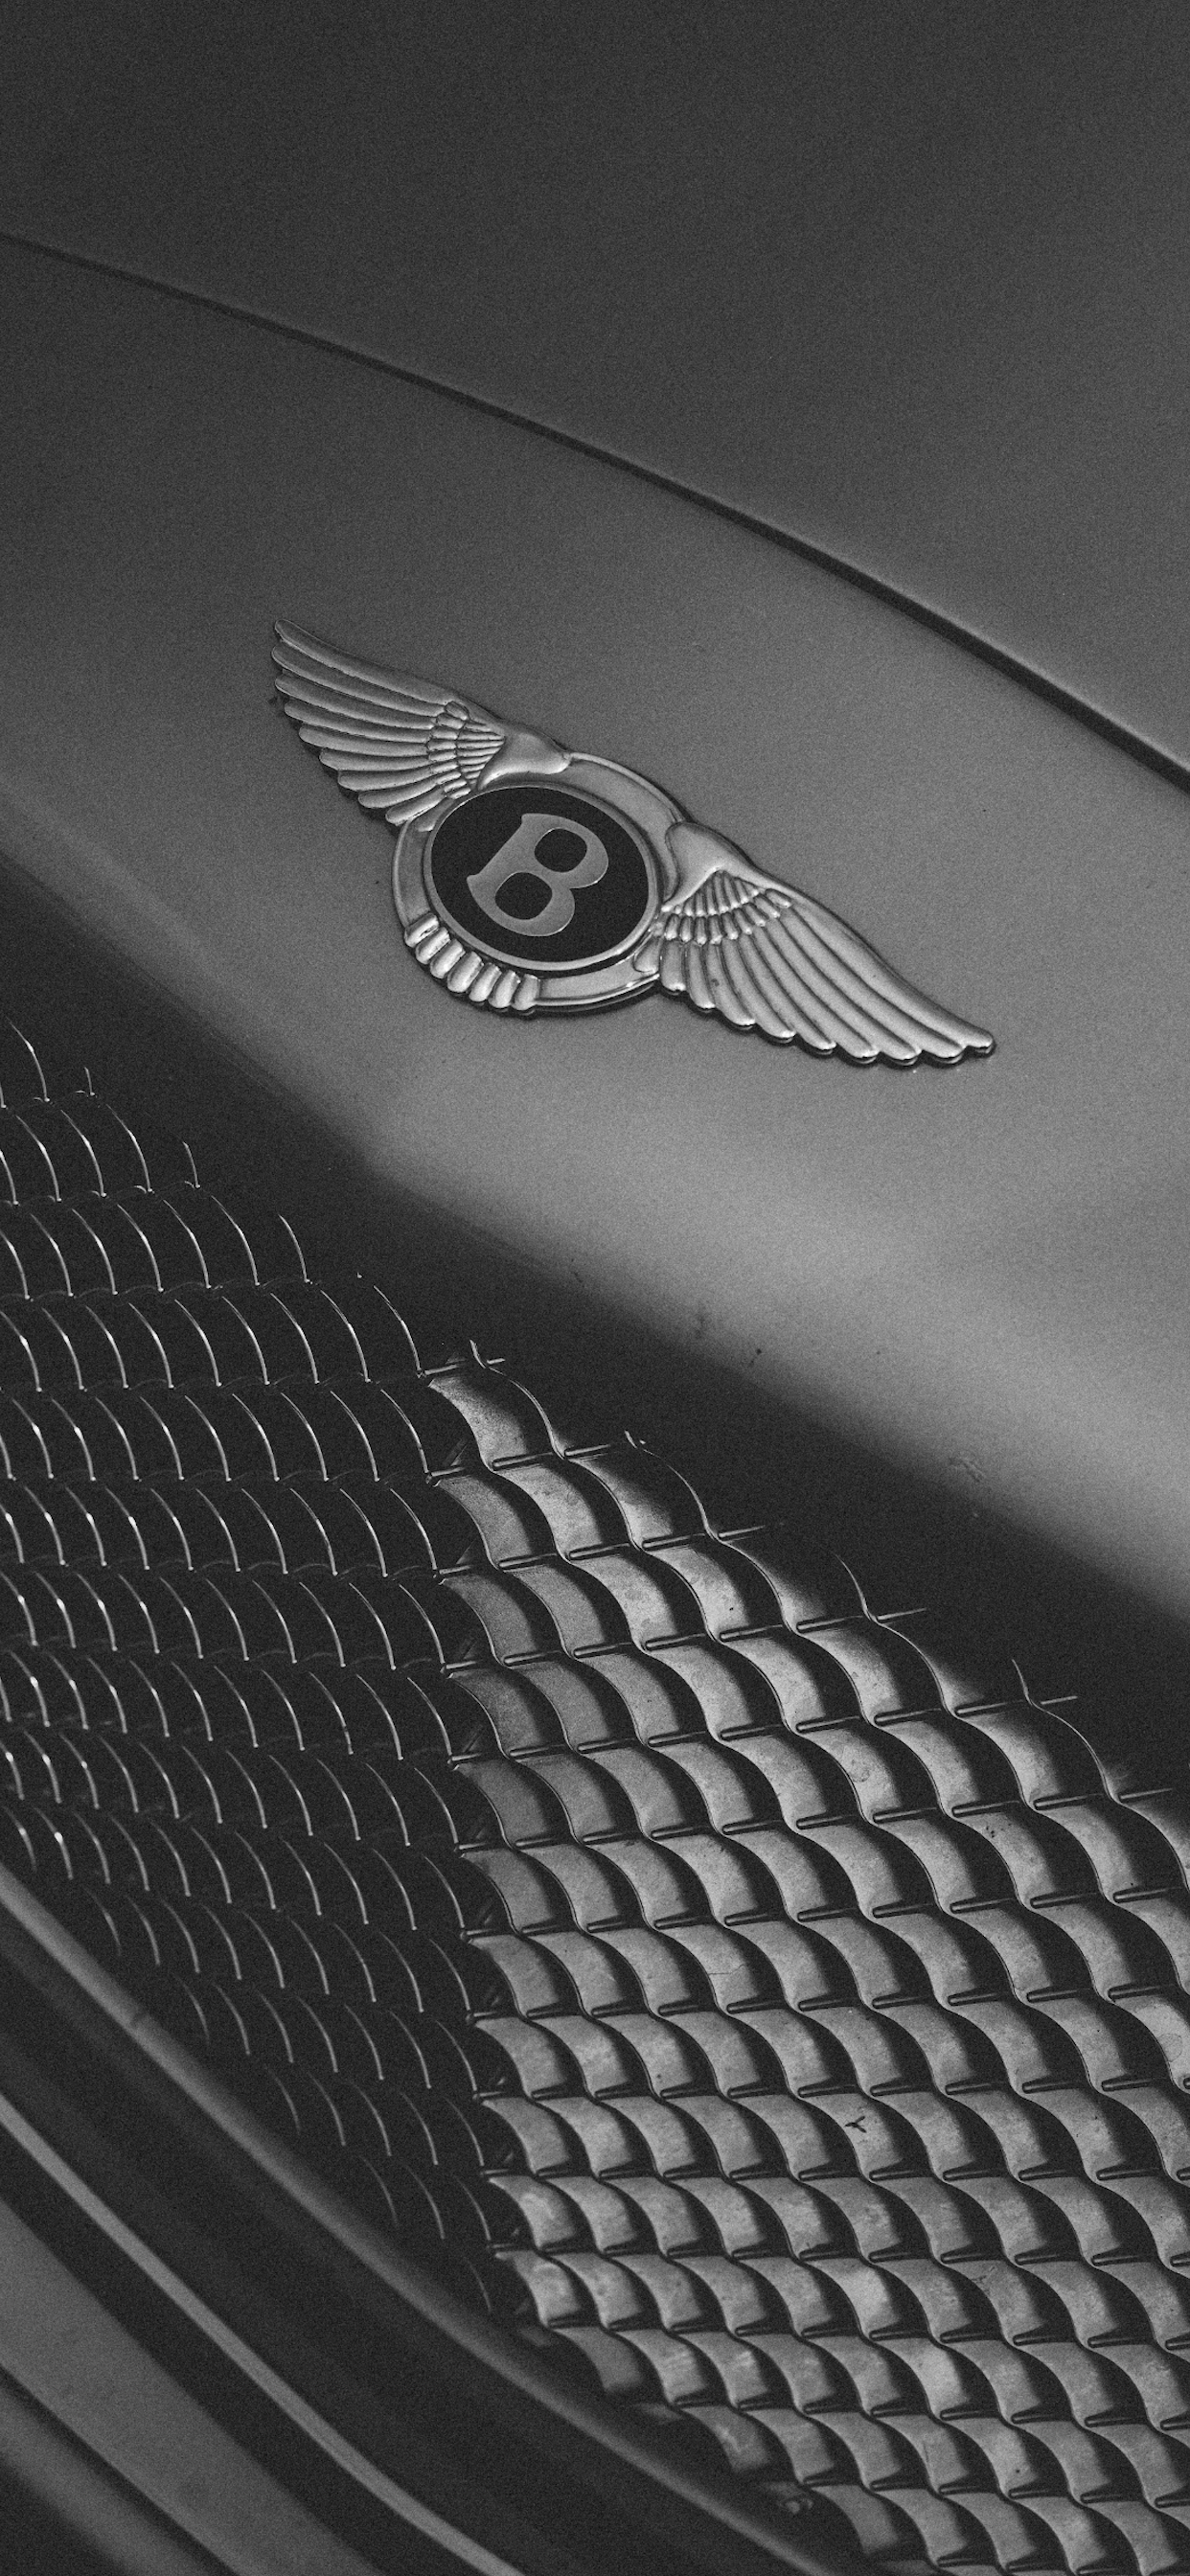 2022 Bentley Continental GT Speed Phone Wallpaper 002 - WSupercars